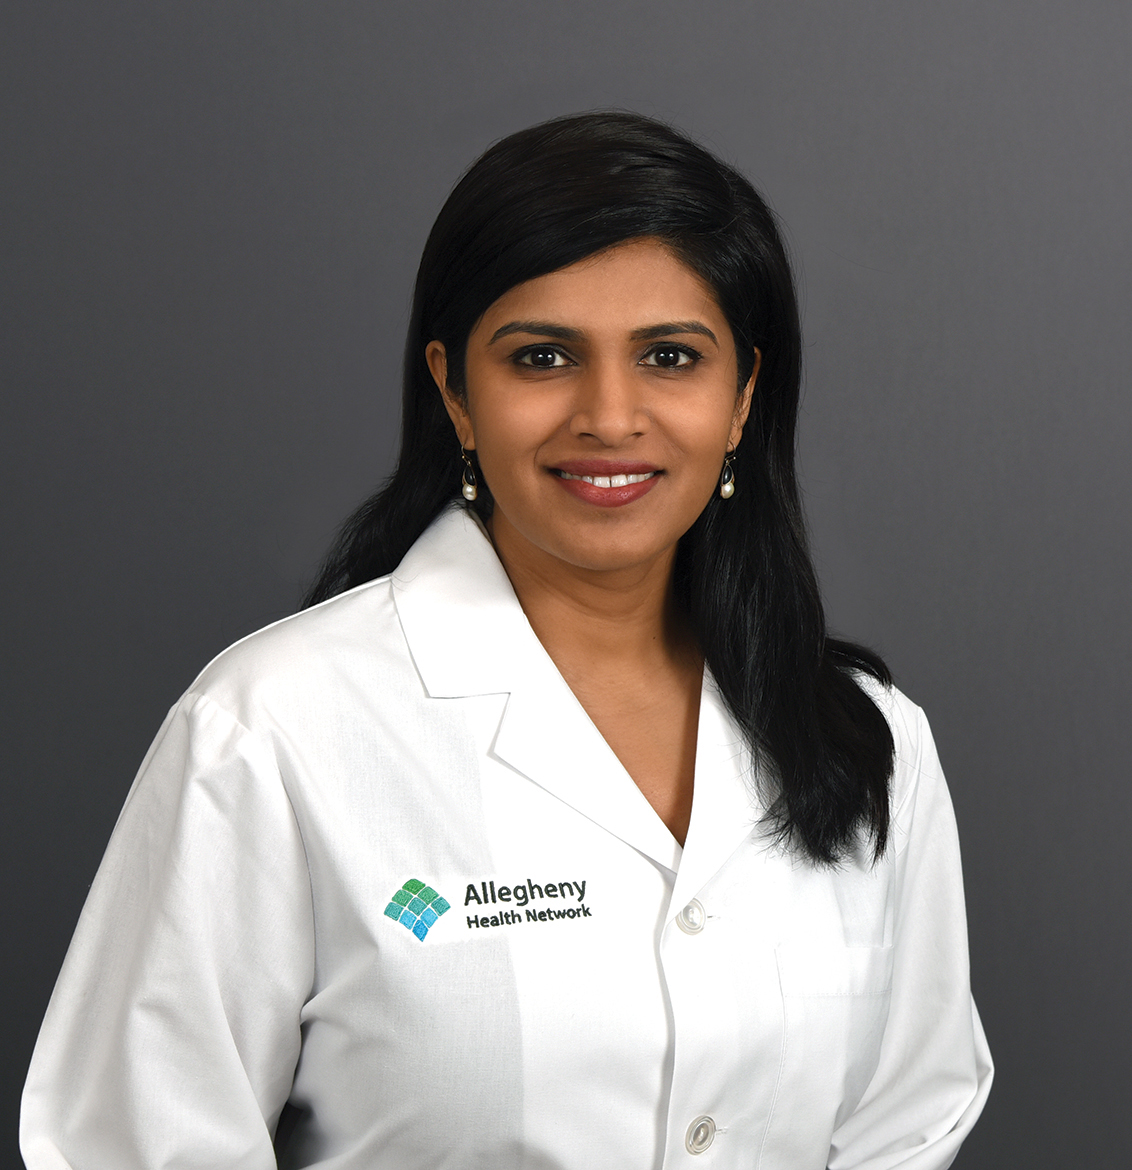 Dr. Anita Radhakrishnan, an attending cardiologist at Allegheny Health Network (AHN) Women’s Heart Center.